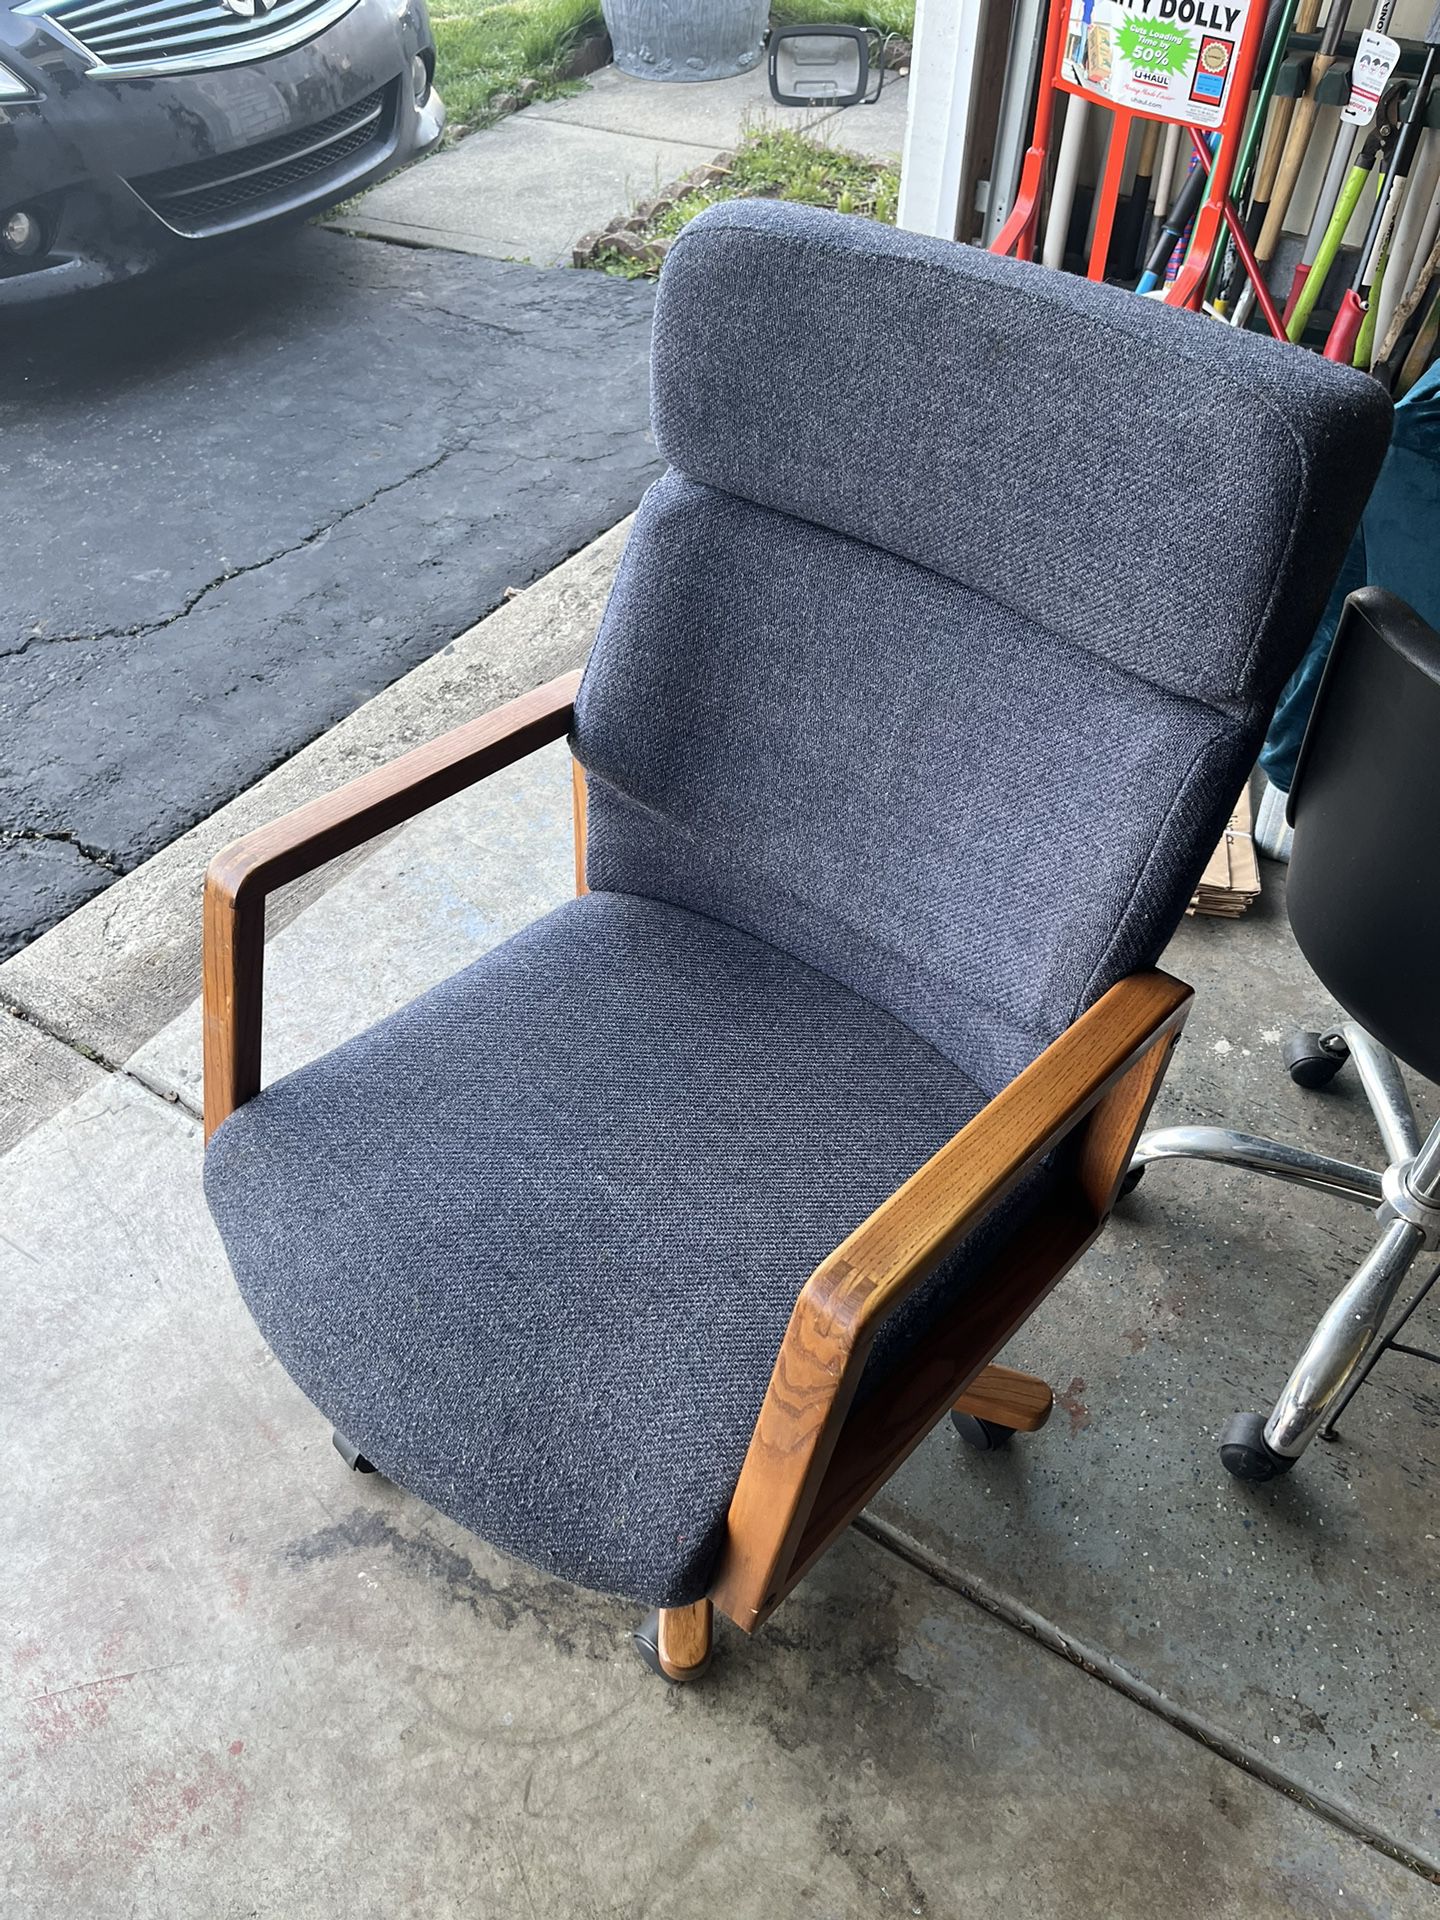 Luxurious Wooden Rocking Chair